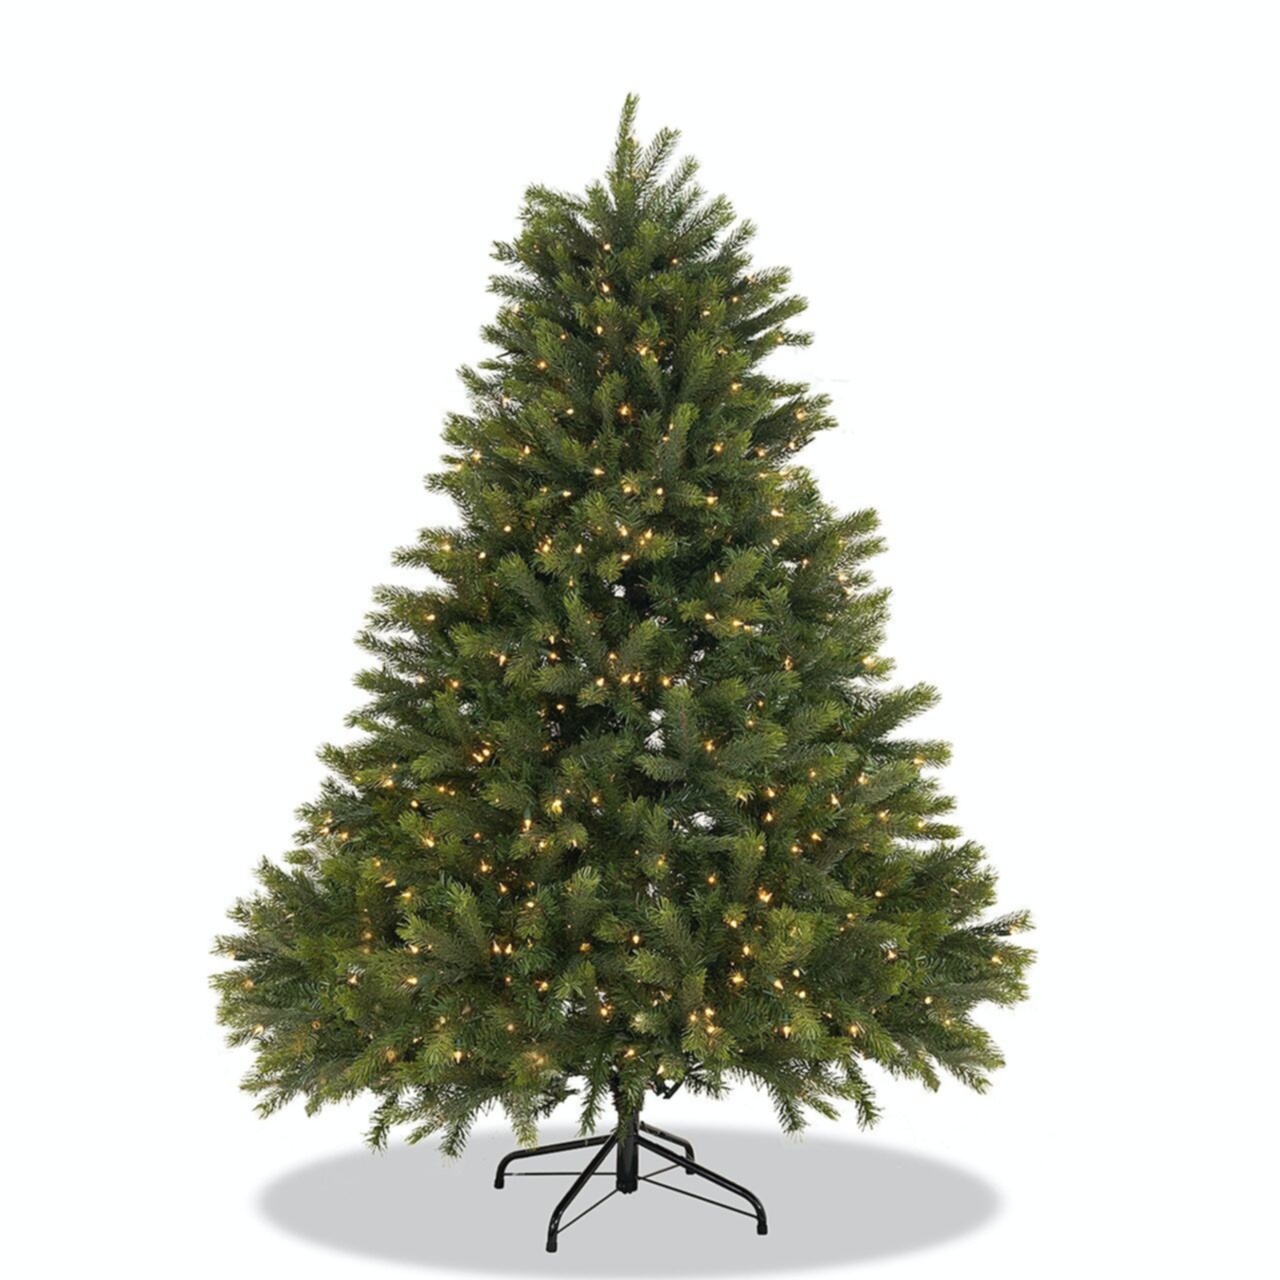 Christmas tree 6.5ft Artificial for the holiday season 